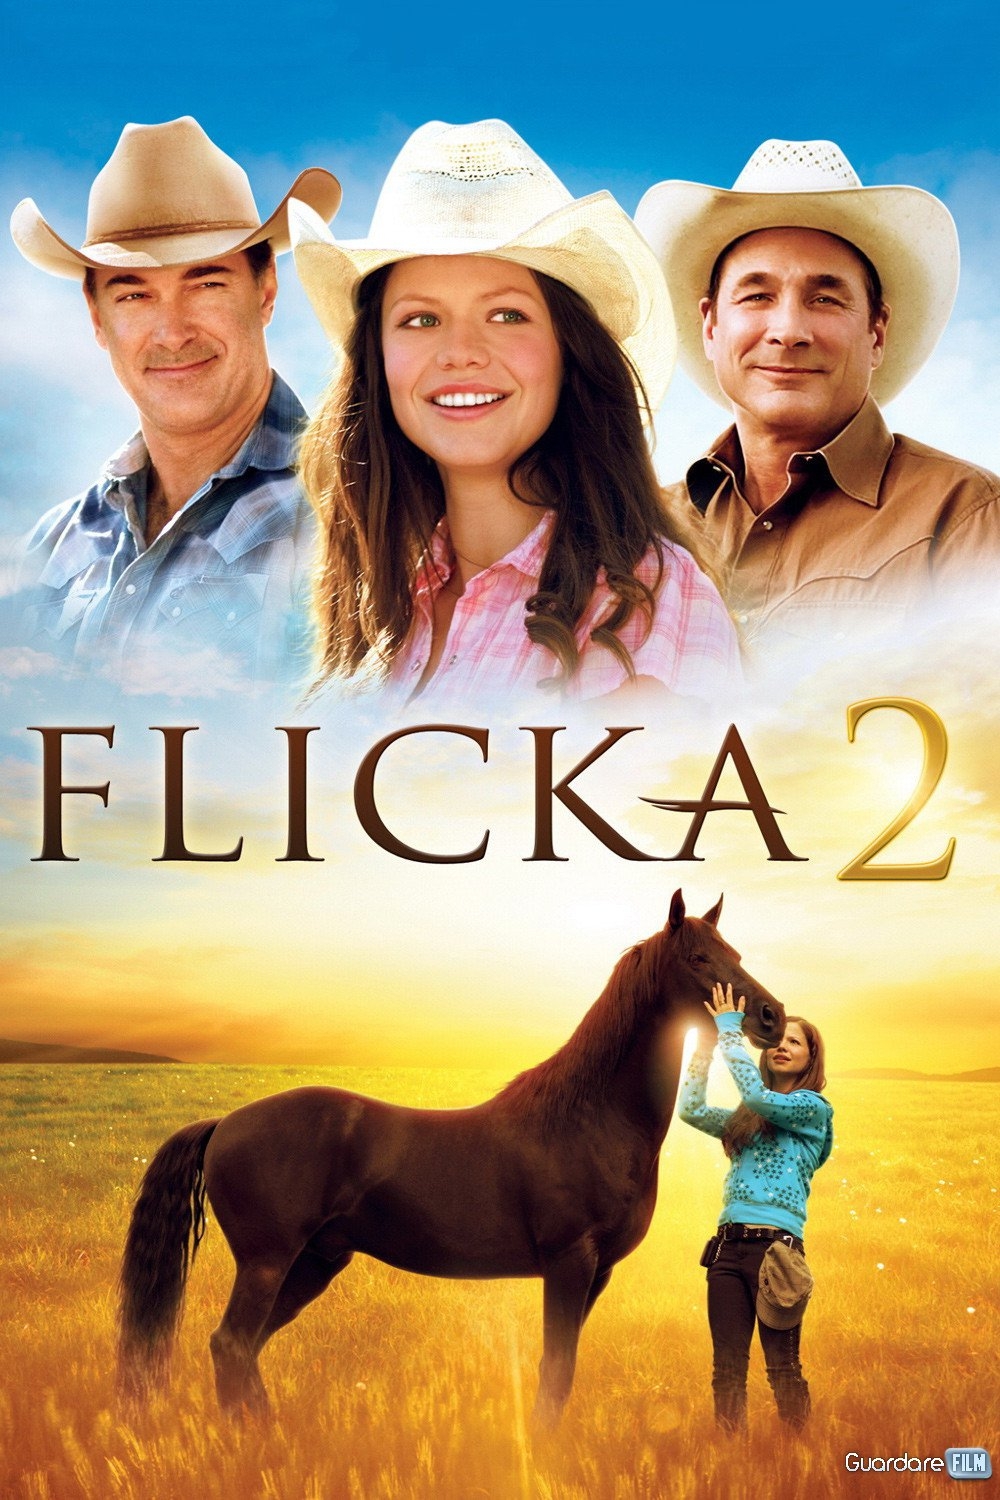 Flicka 2 - Amici per sempre (2010)